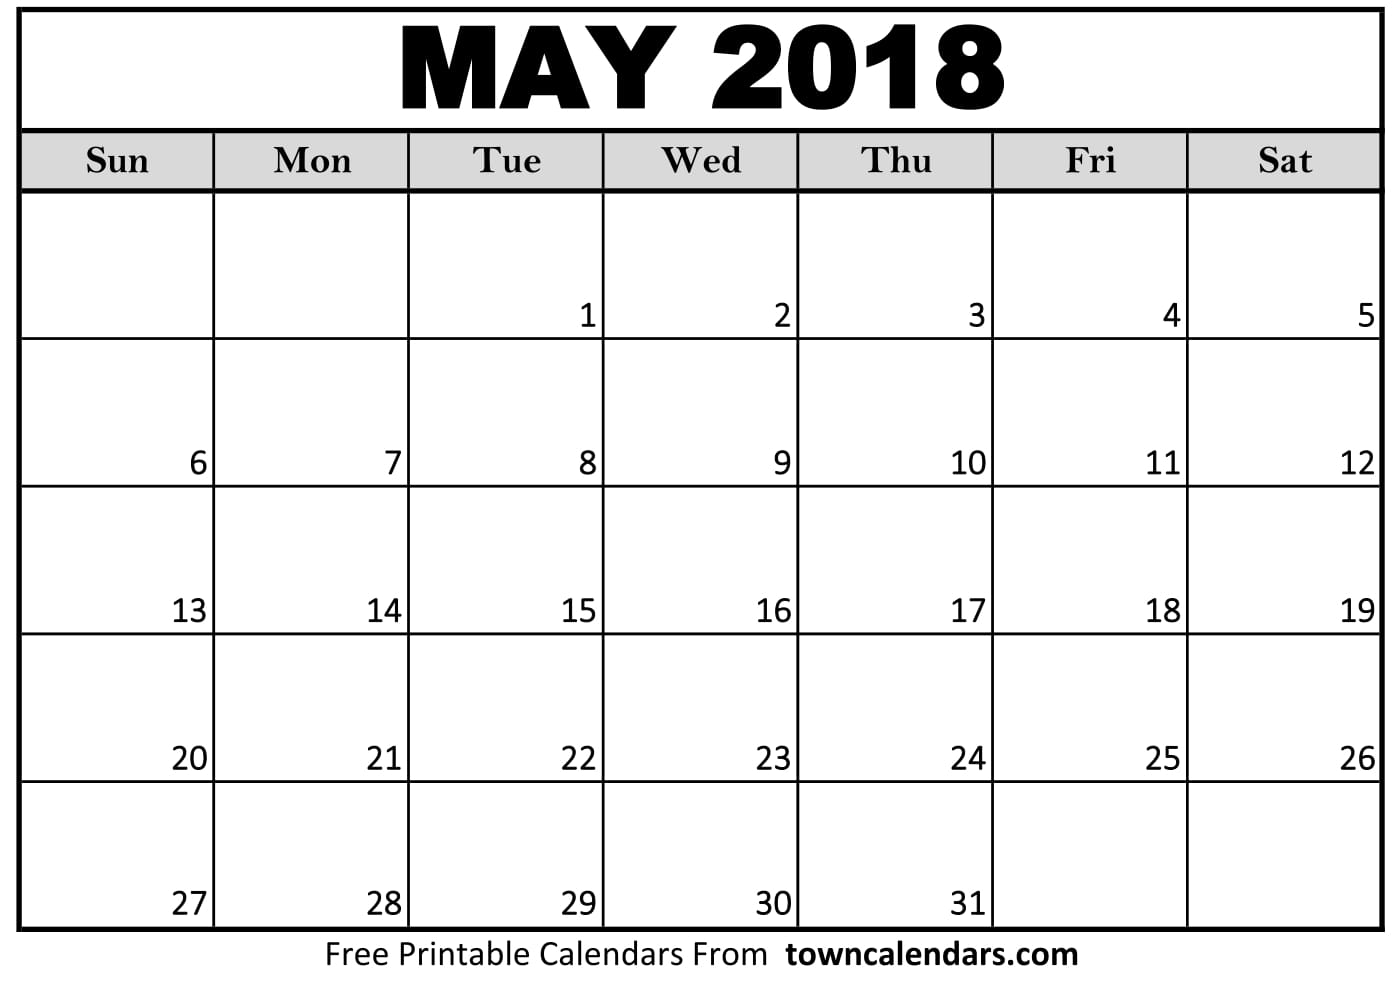 printable-may-2018-calendar-towncalendars